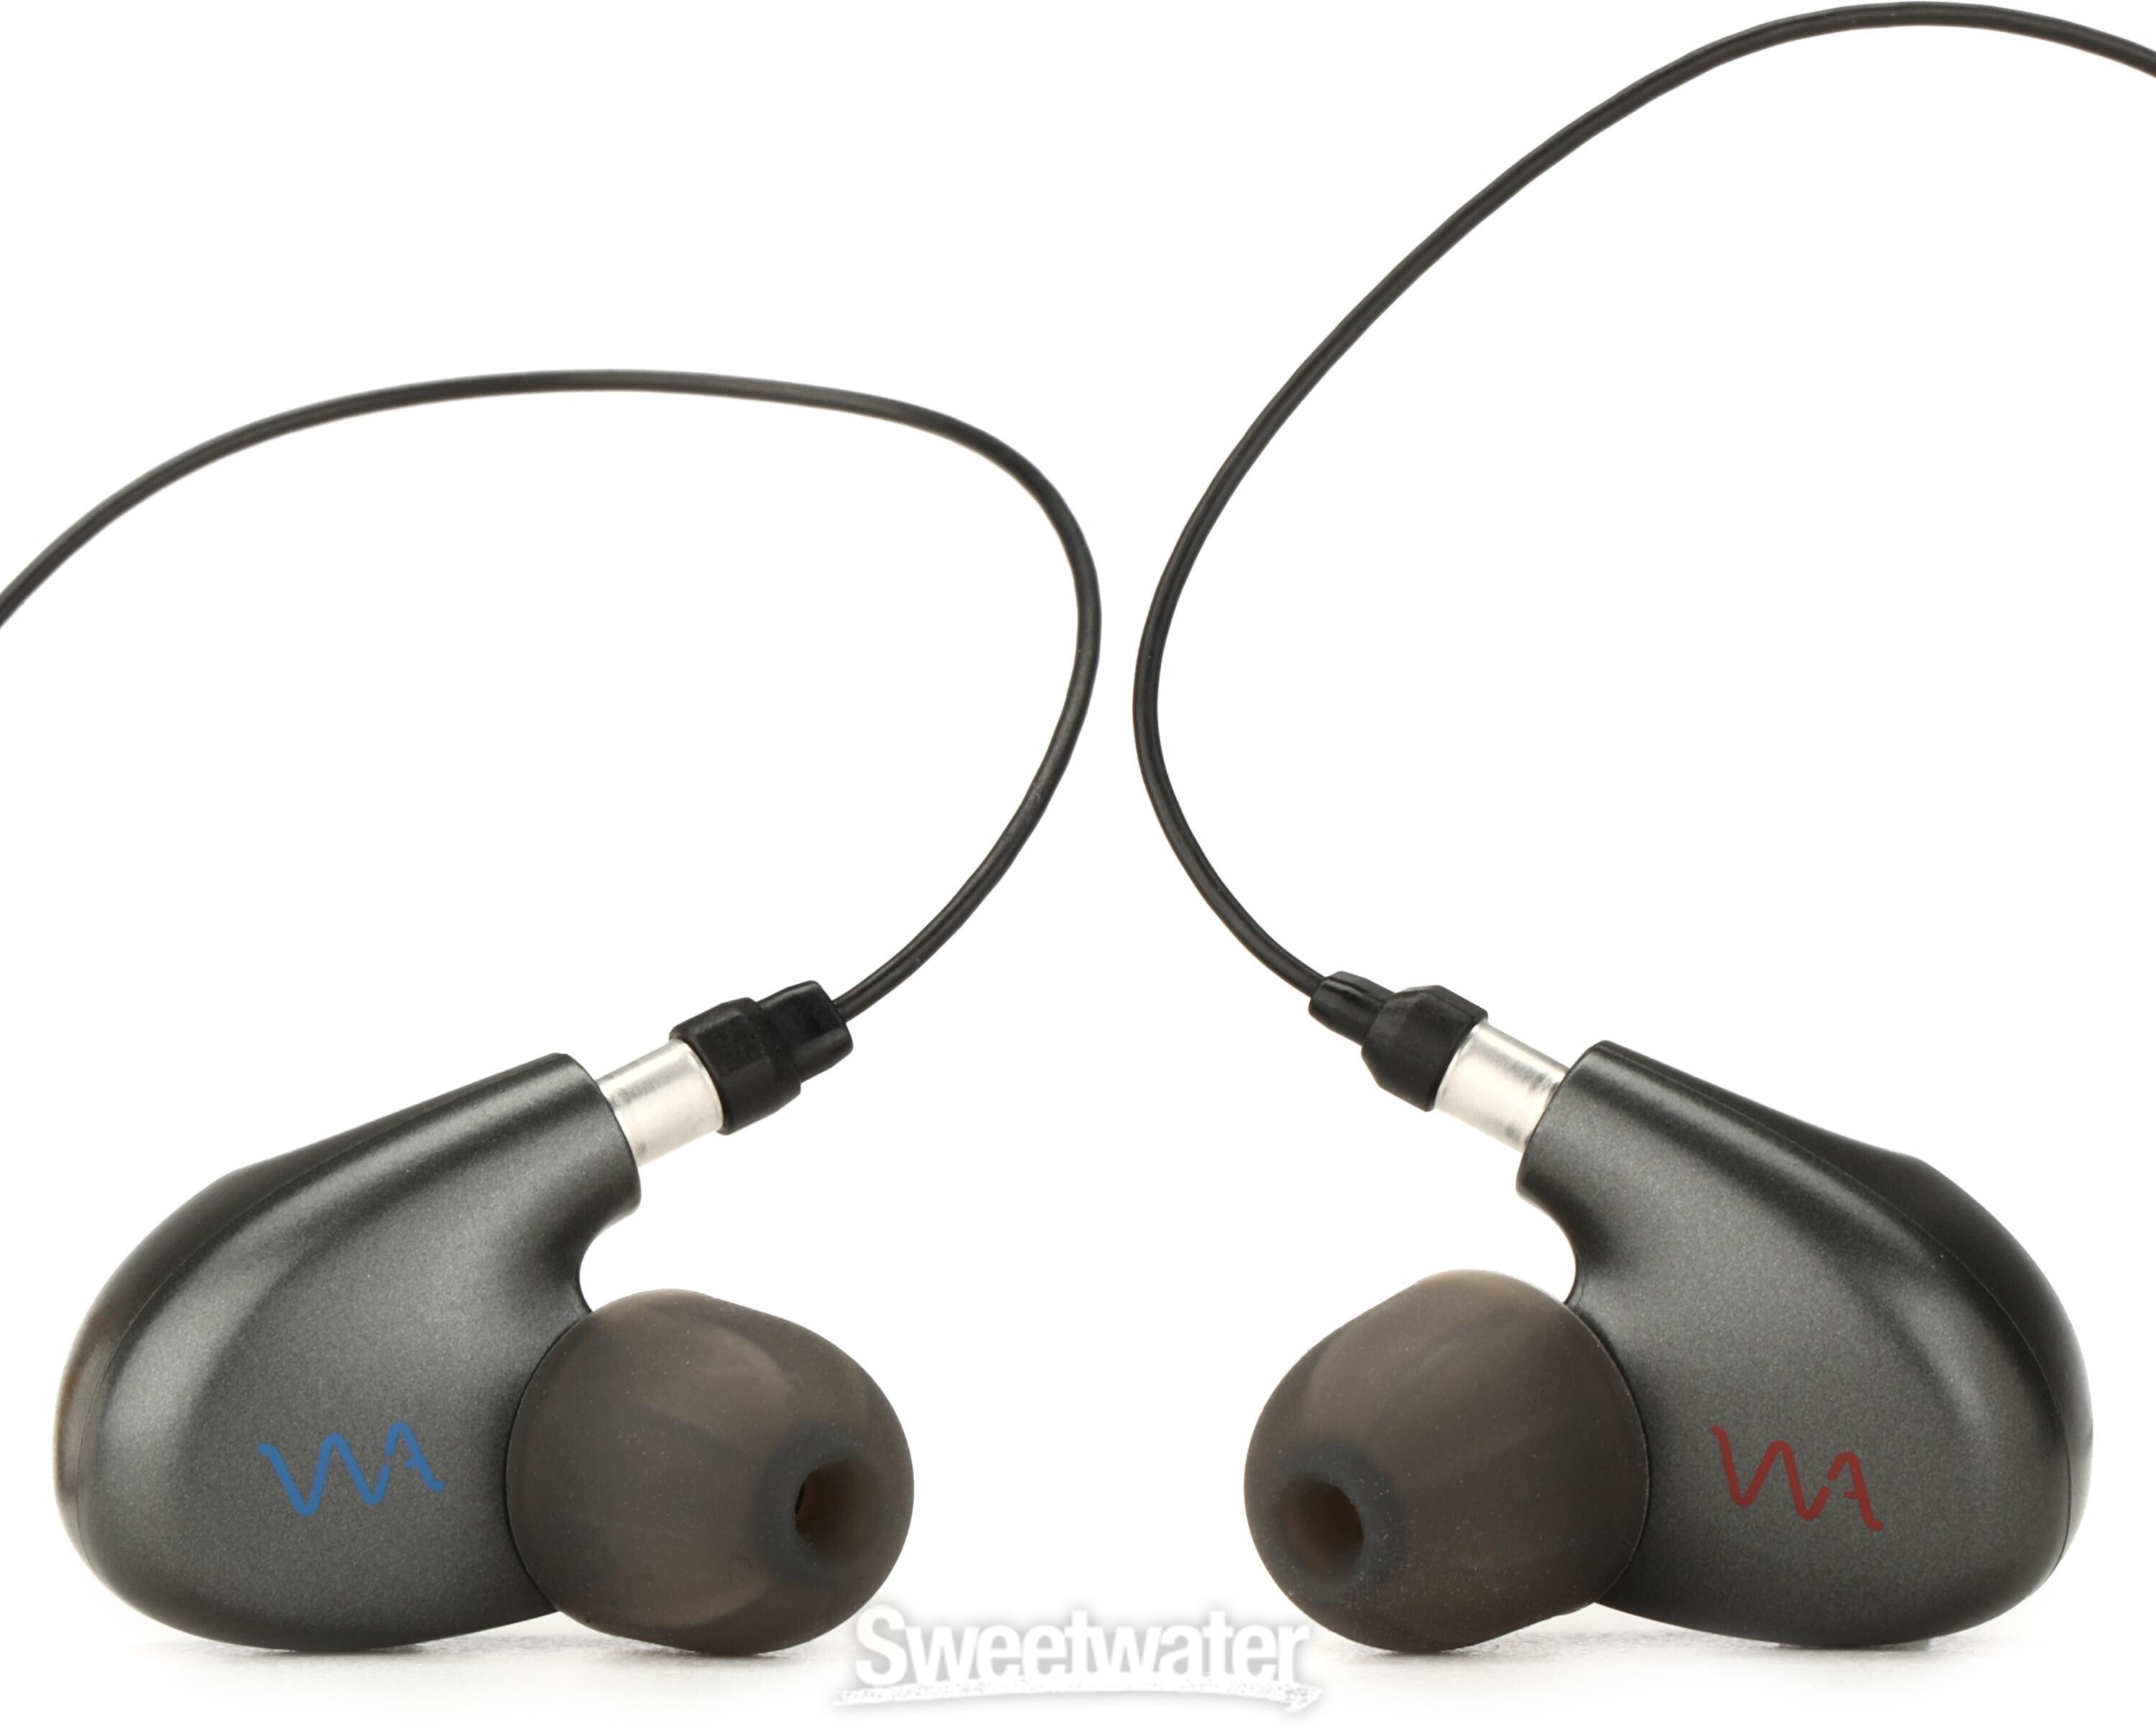 Westone Audio Mach 20 2-driver Universal In-ear Monitors - 2-way |  Sweetwater